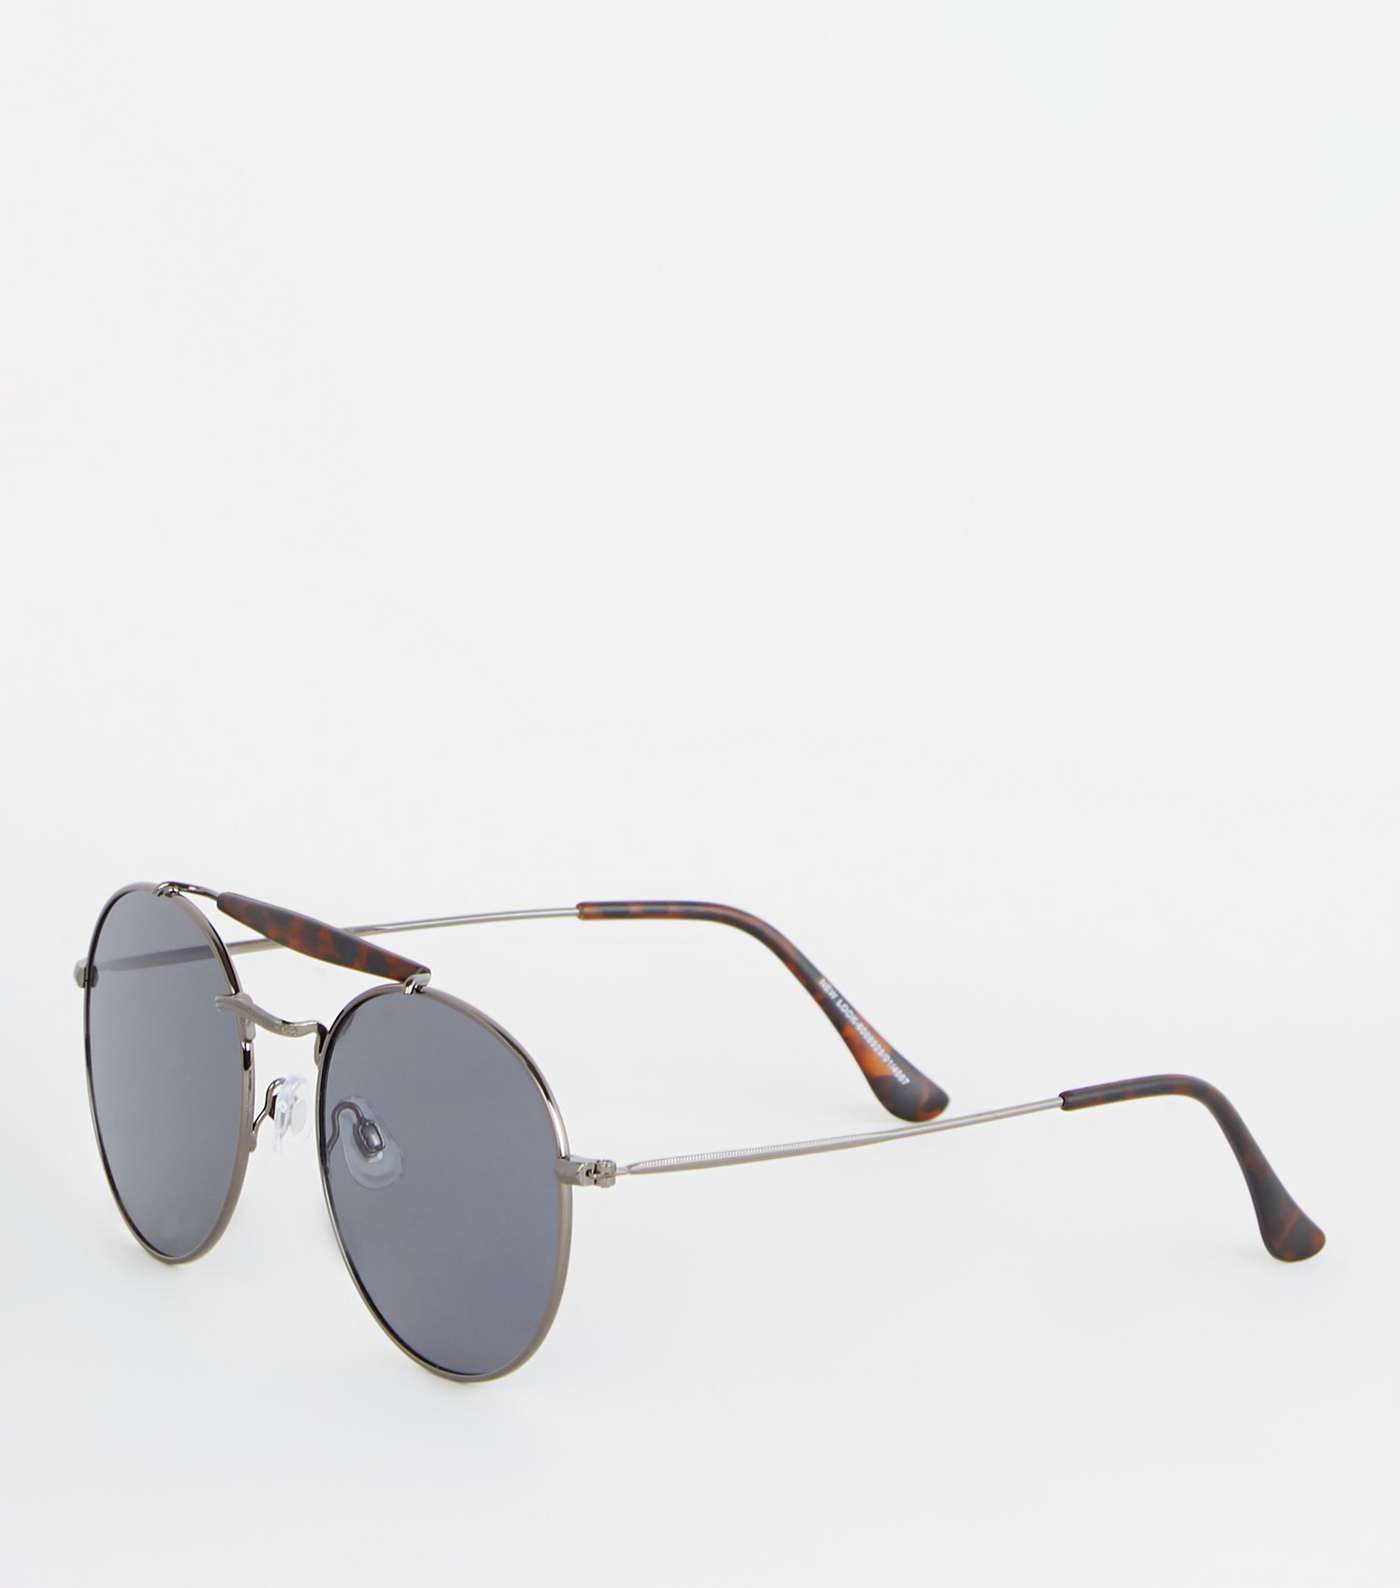 Black Faux Tortoiseshell Brow Bar Pilot Sunglasses 